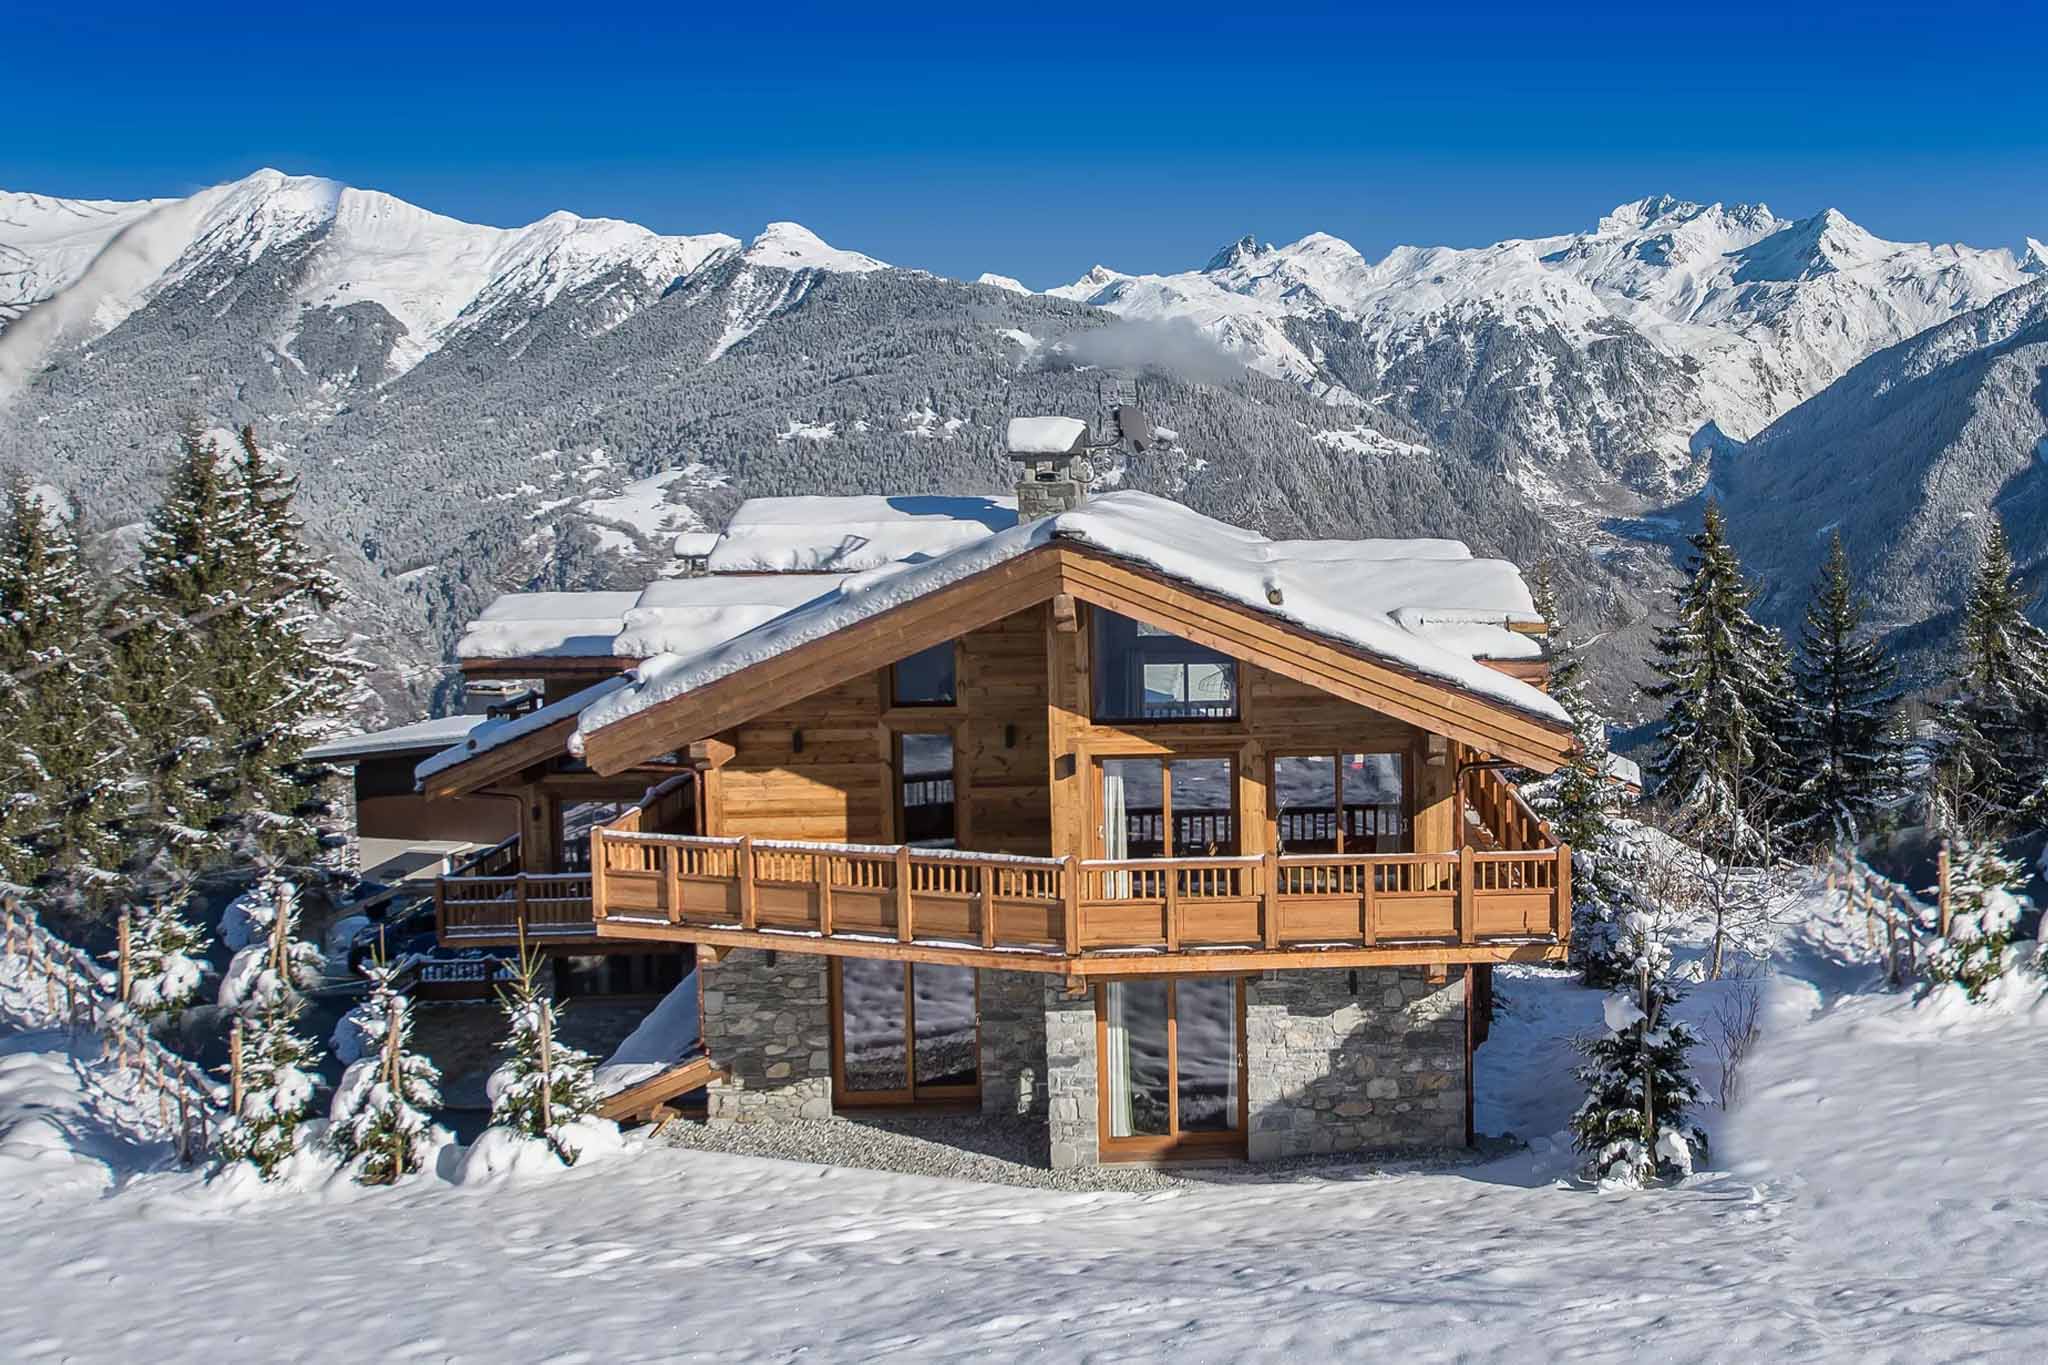 Location Chalet Studio Appartement Ski Montagne Odysight Travel Experts